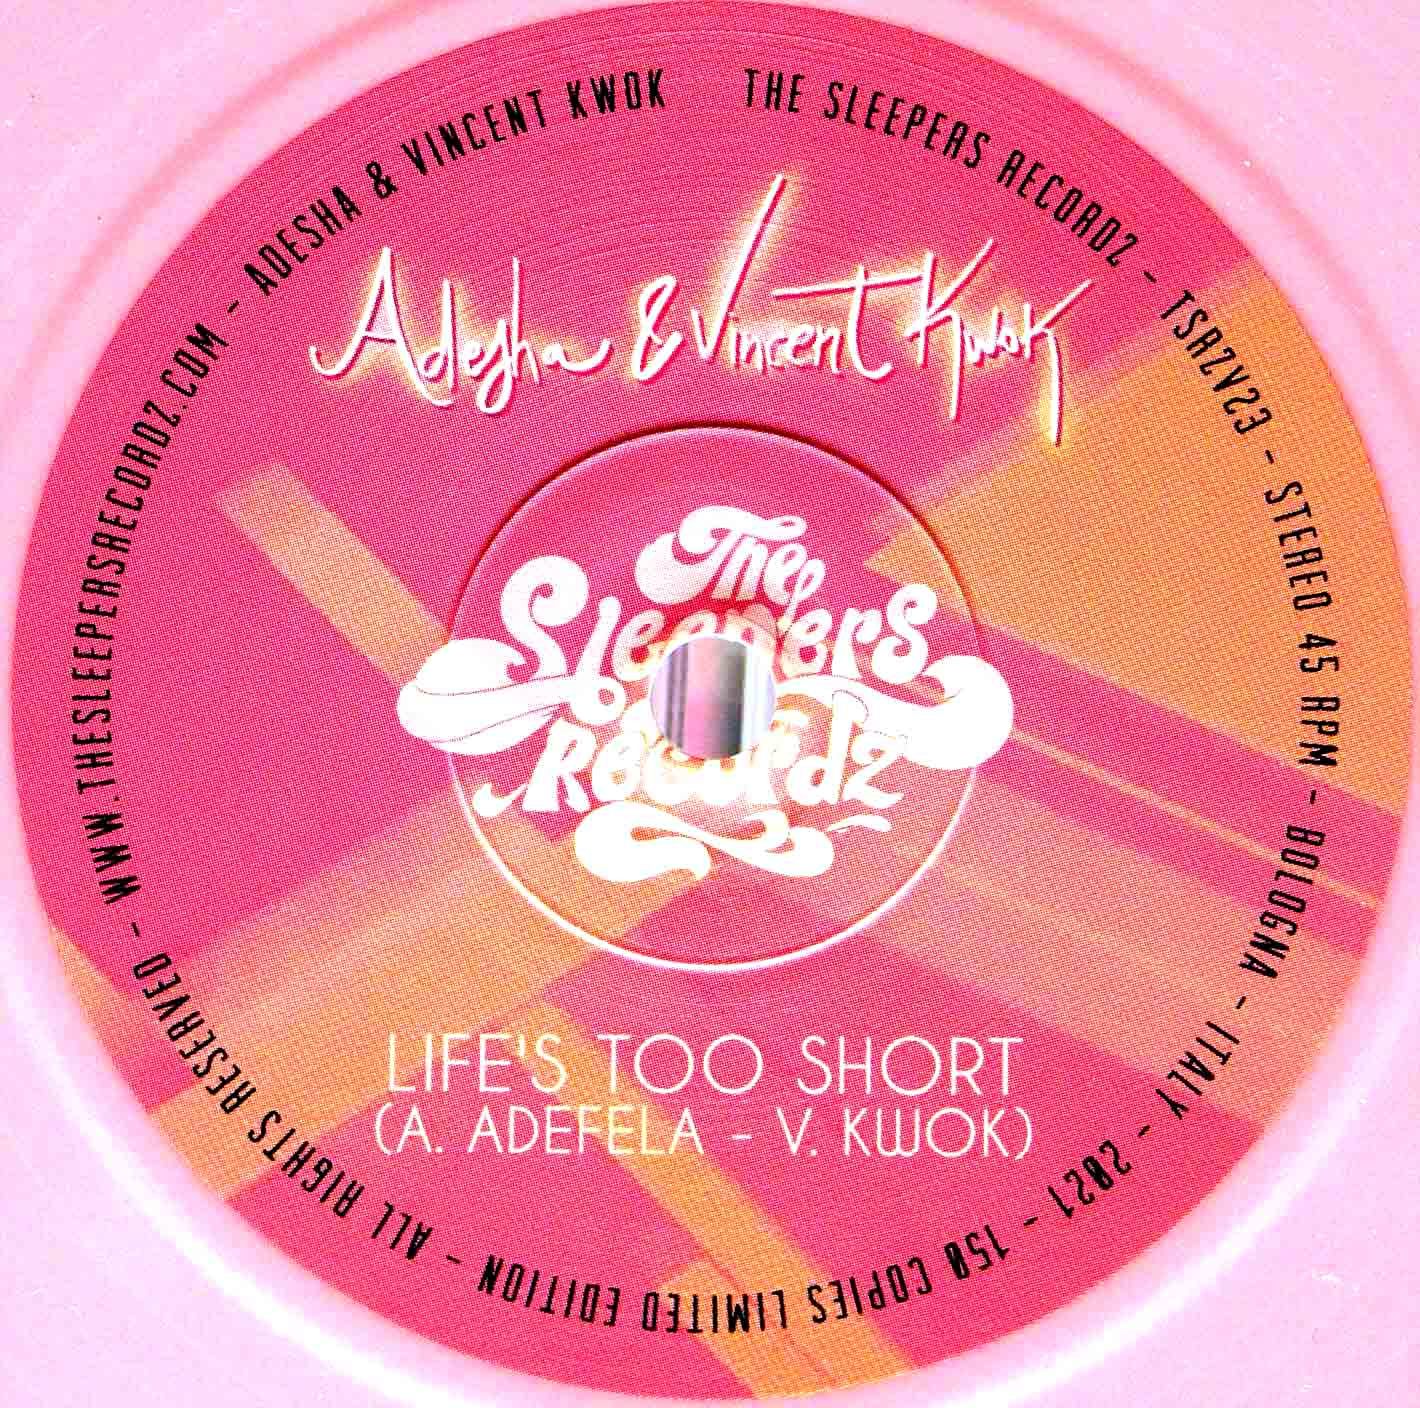 Adesha Vincent Kwok – Lifes Too Short 03